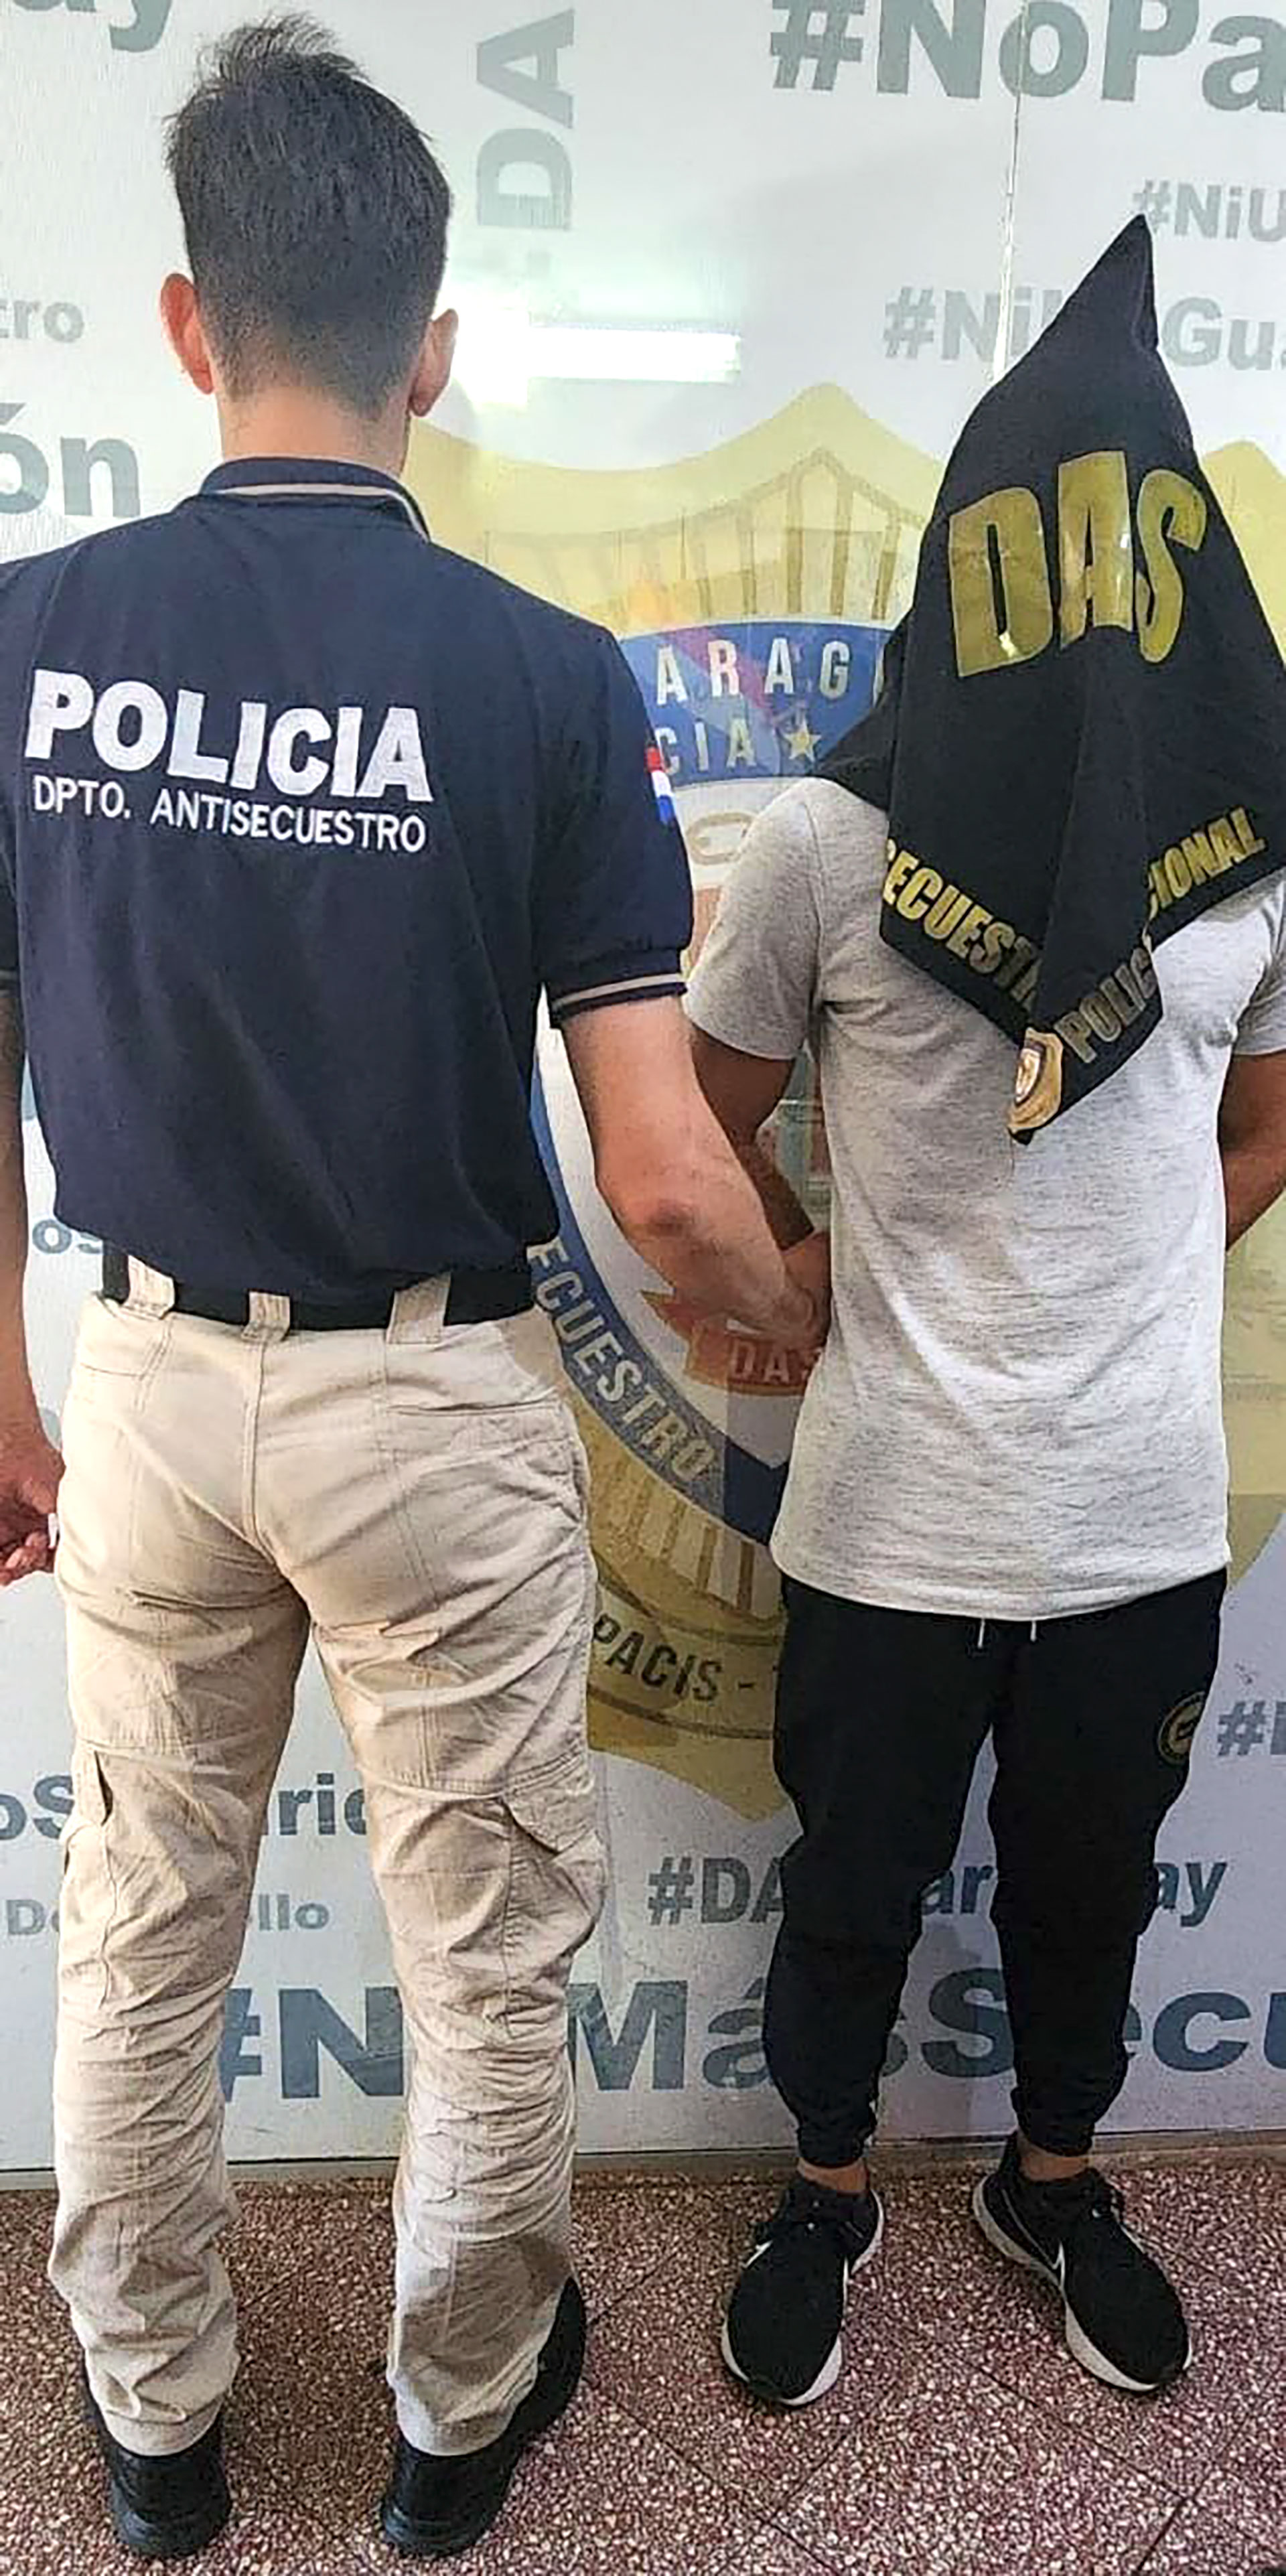 The authorities arrested Eduardo García for threats against the US ambassador